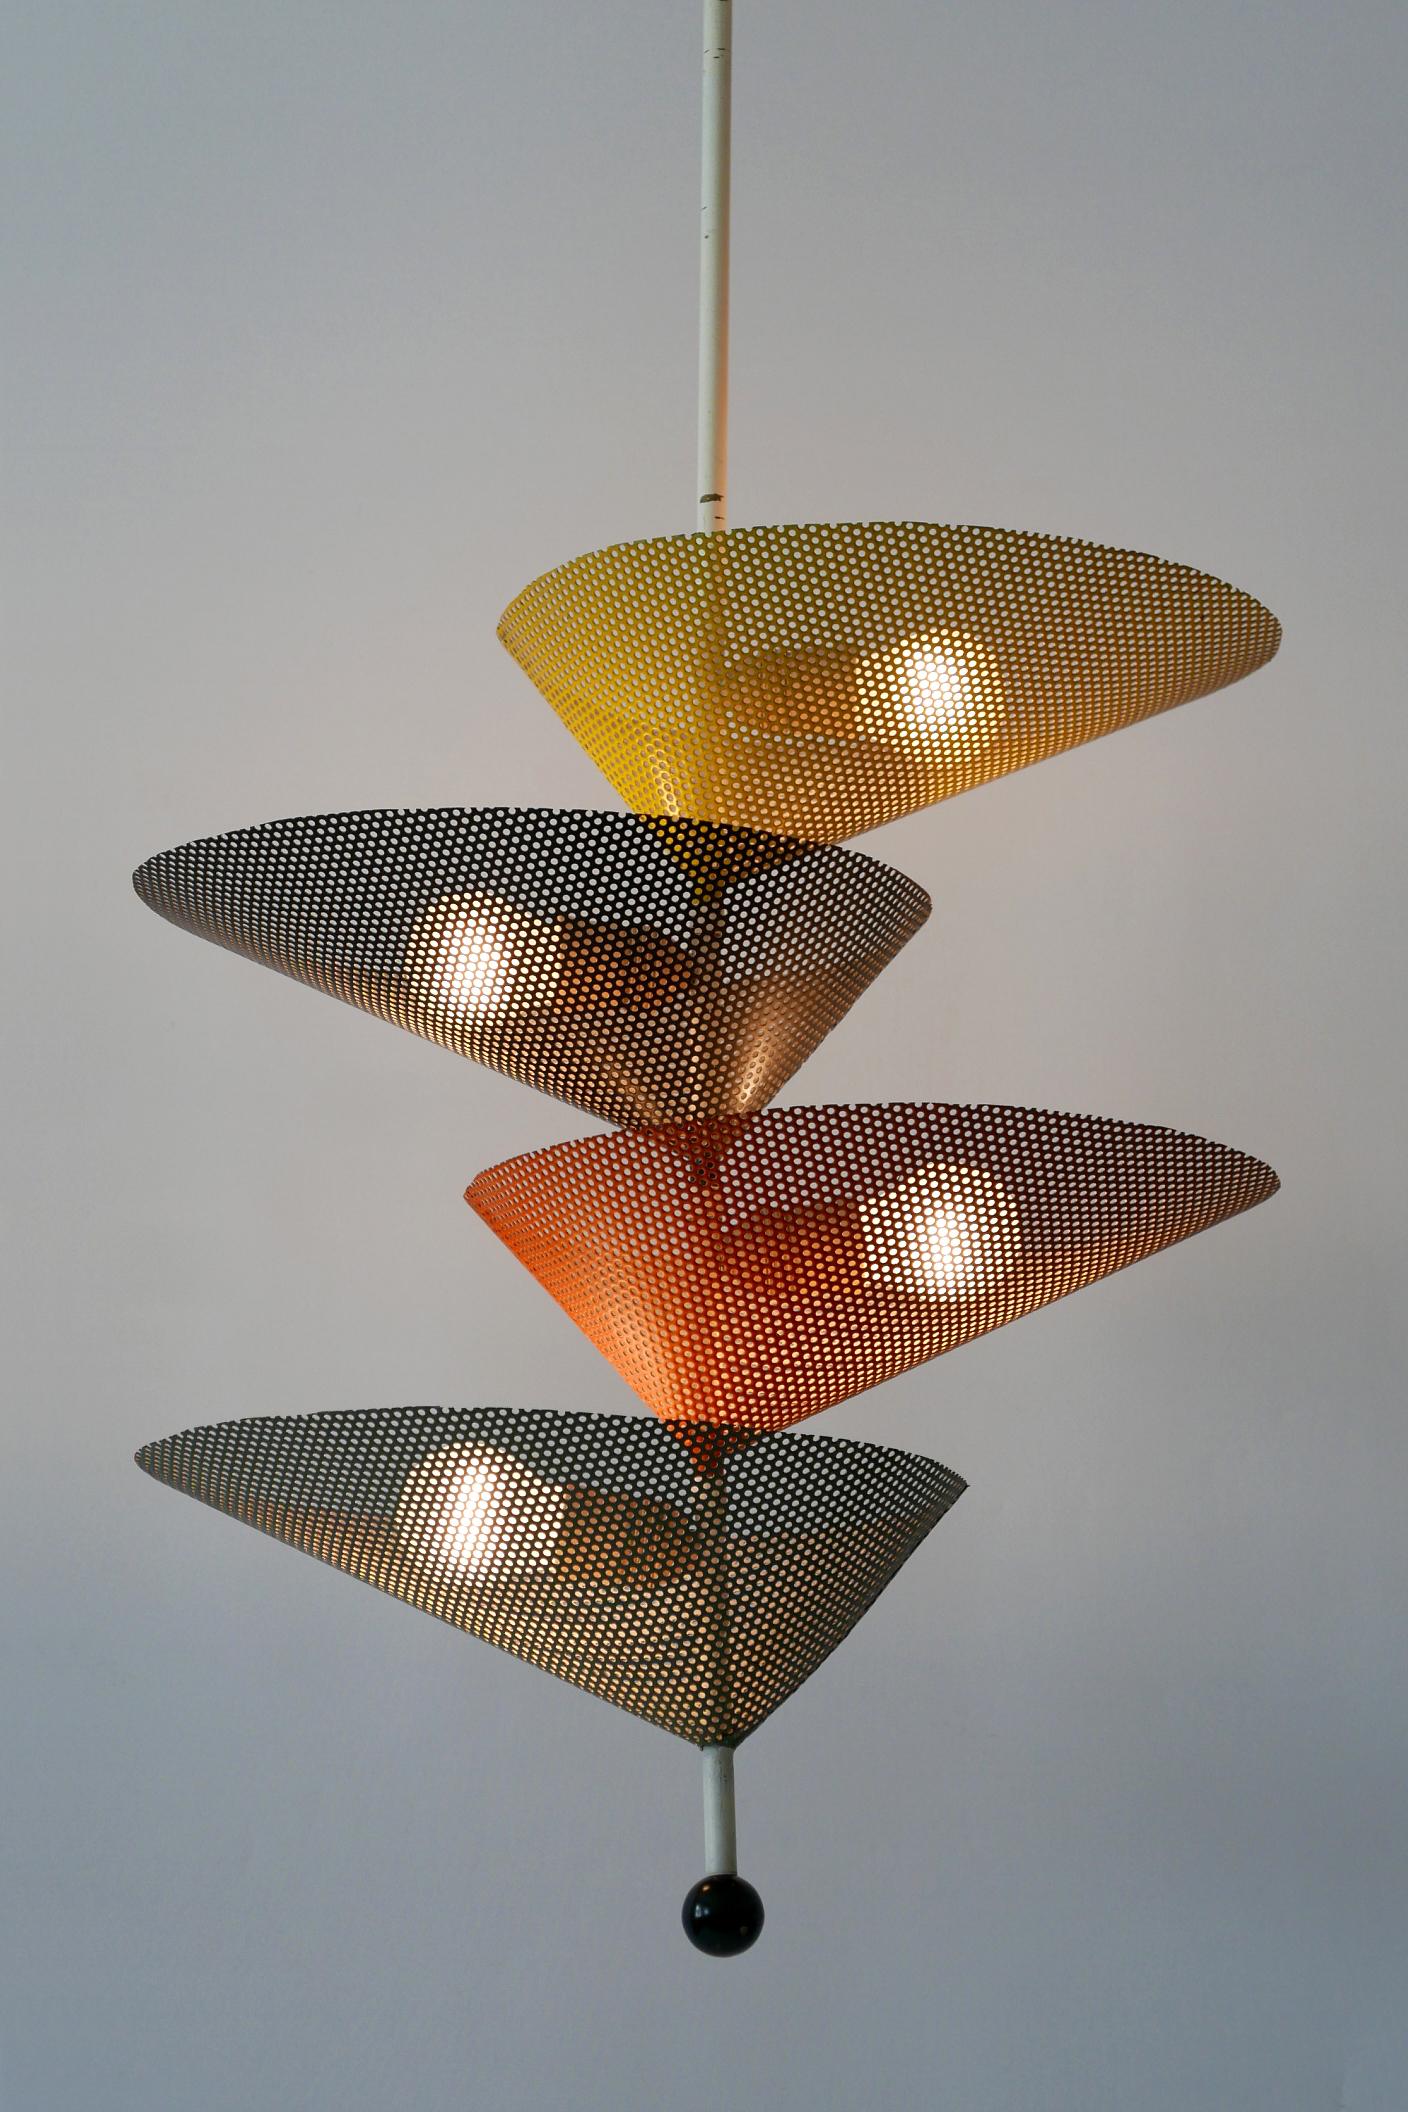 Rare Mid-Century Modern Chandelier or Pendant Lamp by Mathieu Matégot 1950s 3